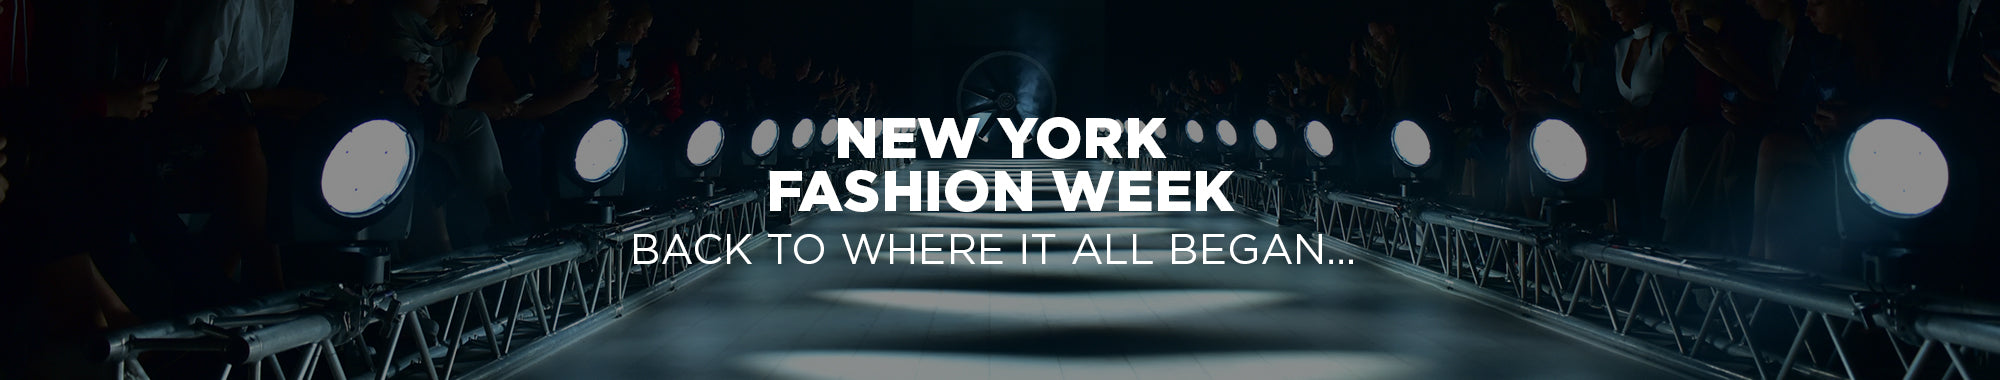 New York is taking on Fashion Week